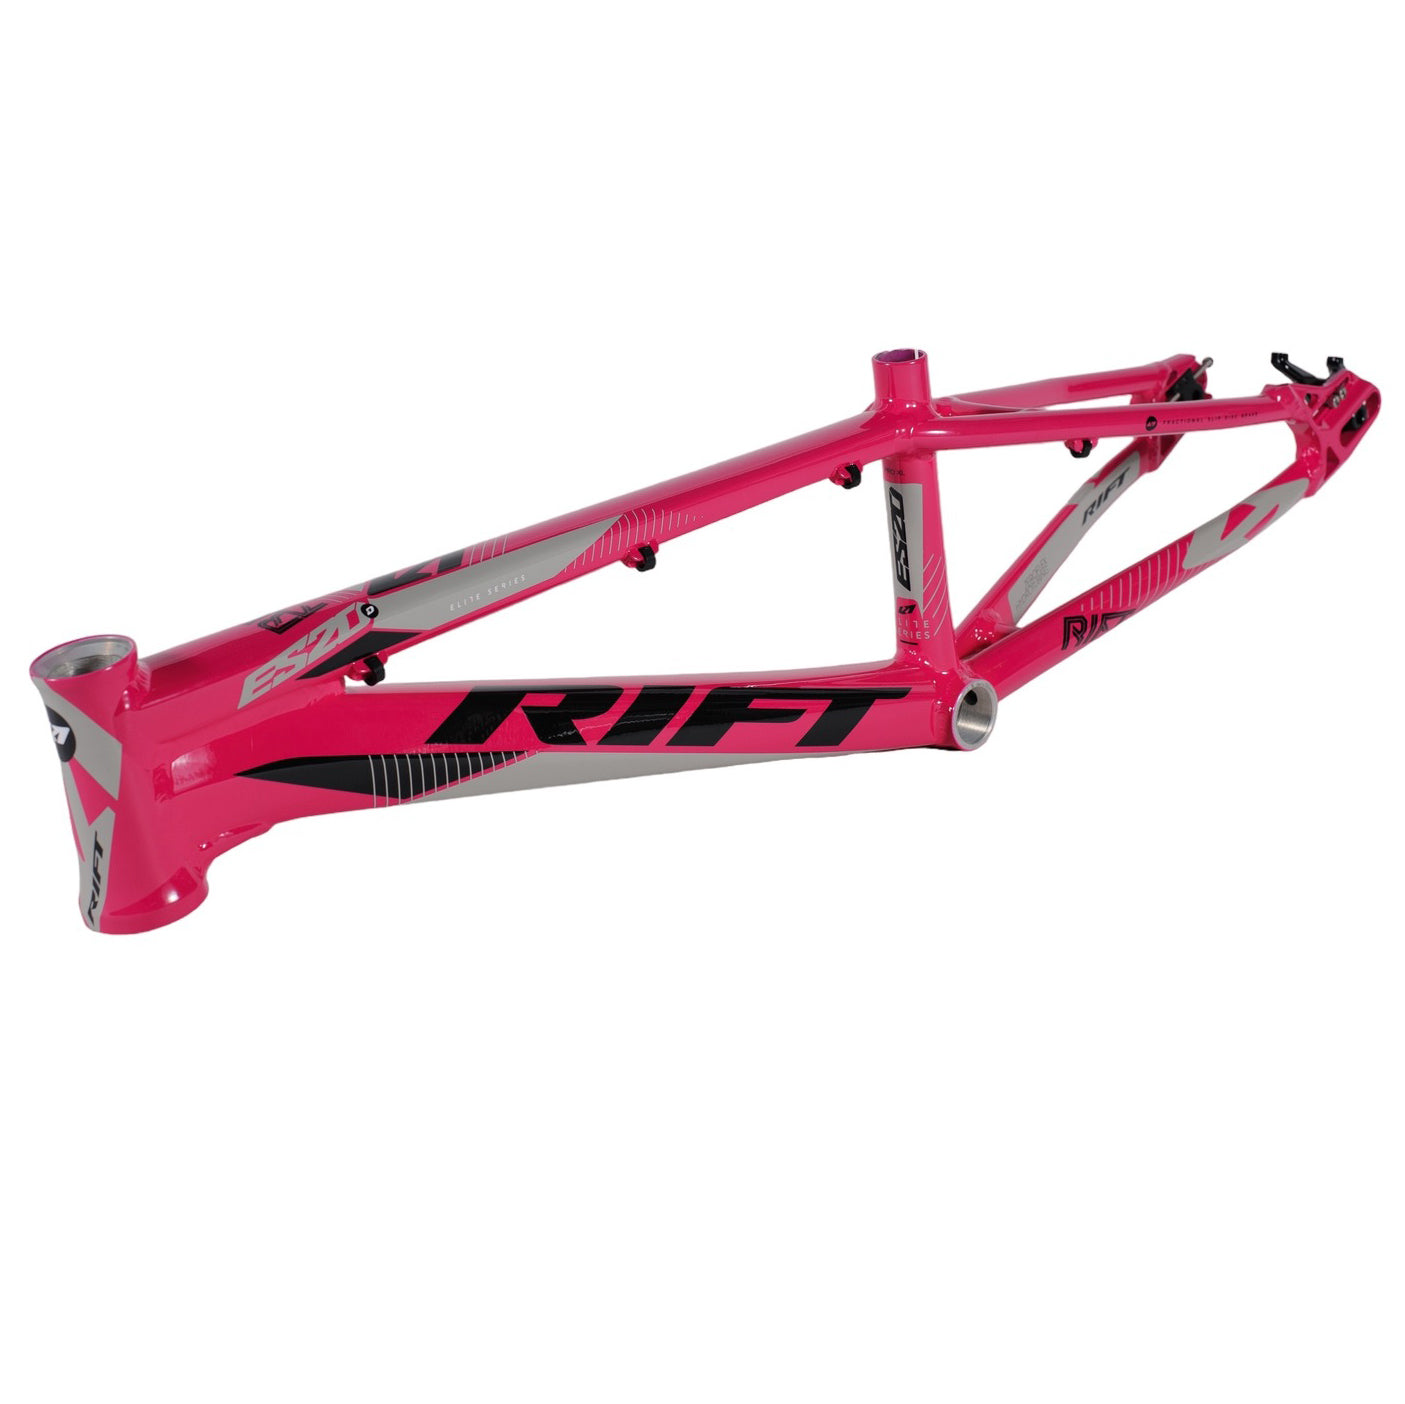 A pink Rift ES24D Frame Pro Cruiser bike frame on a white background.